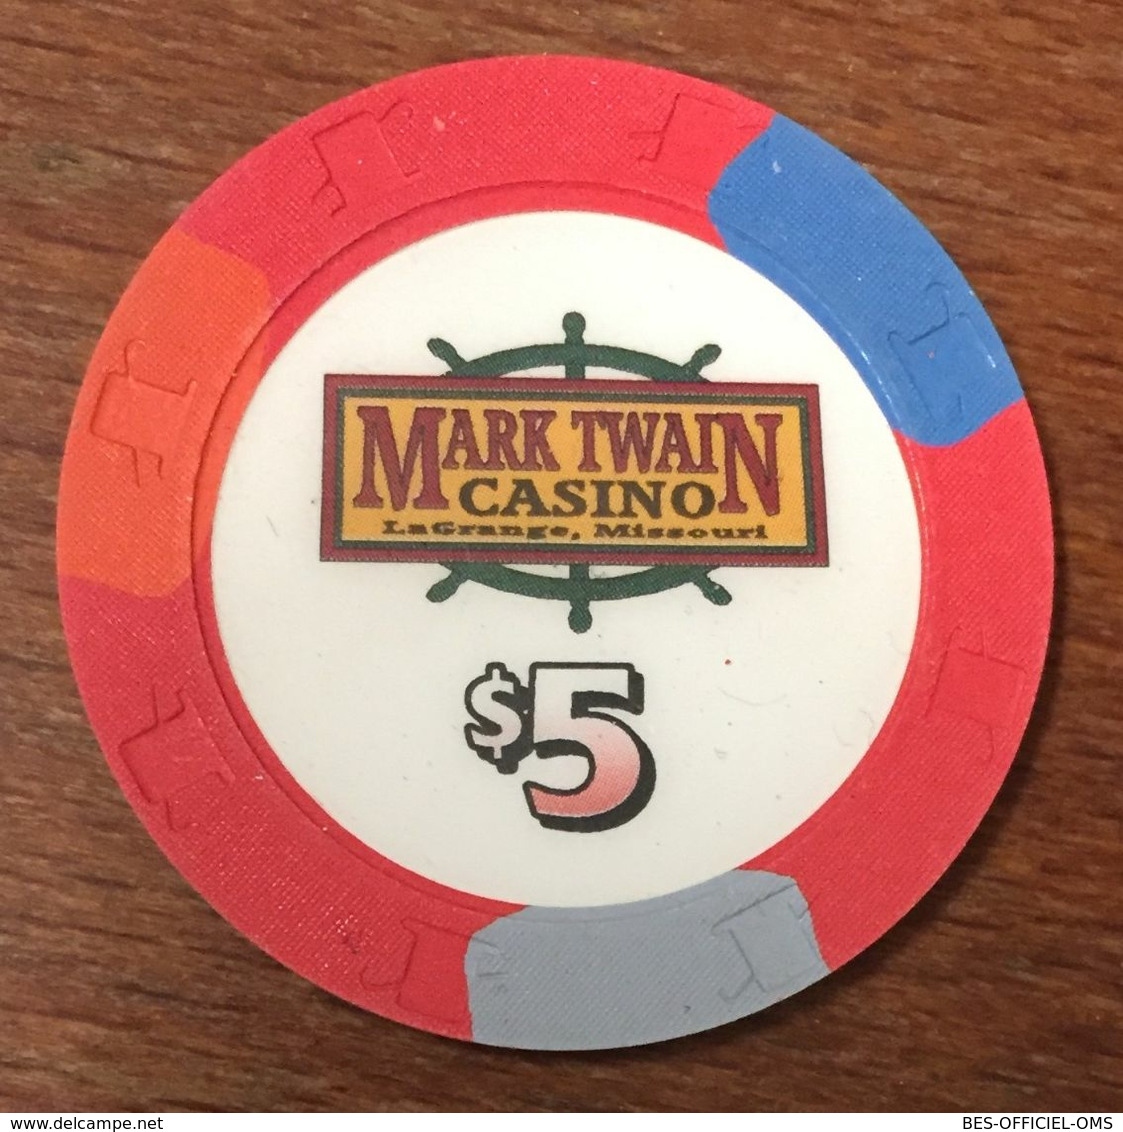 USA MISSOURI LAGRANGE MARK TWAIN CASINO CHIP $ 5 JETON TOKENS COINS - Casino